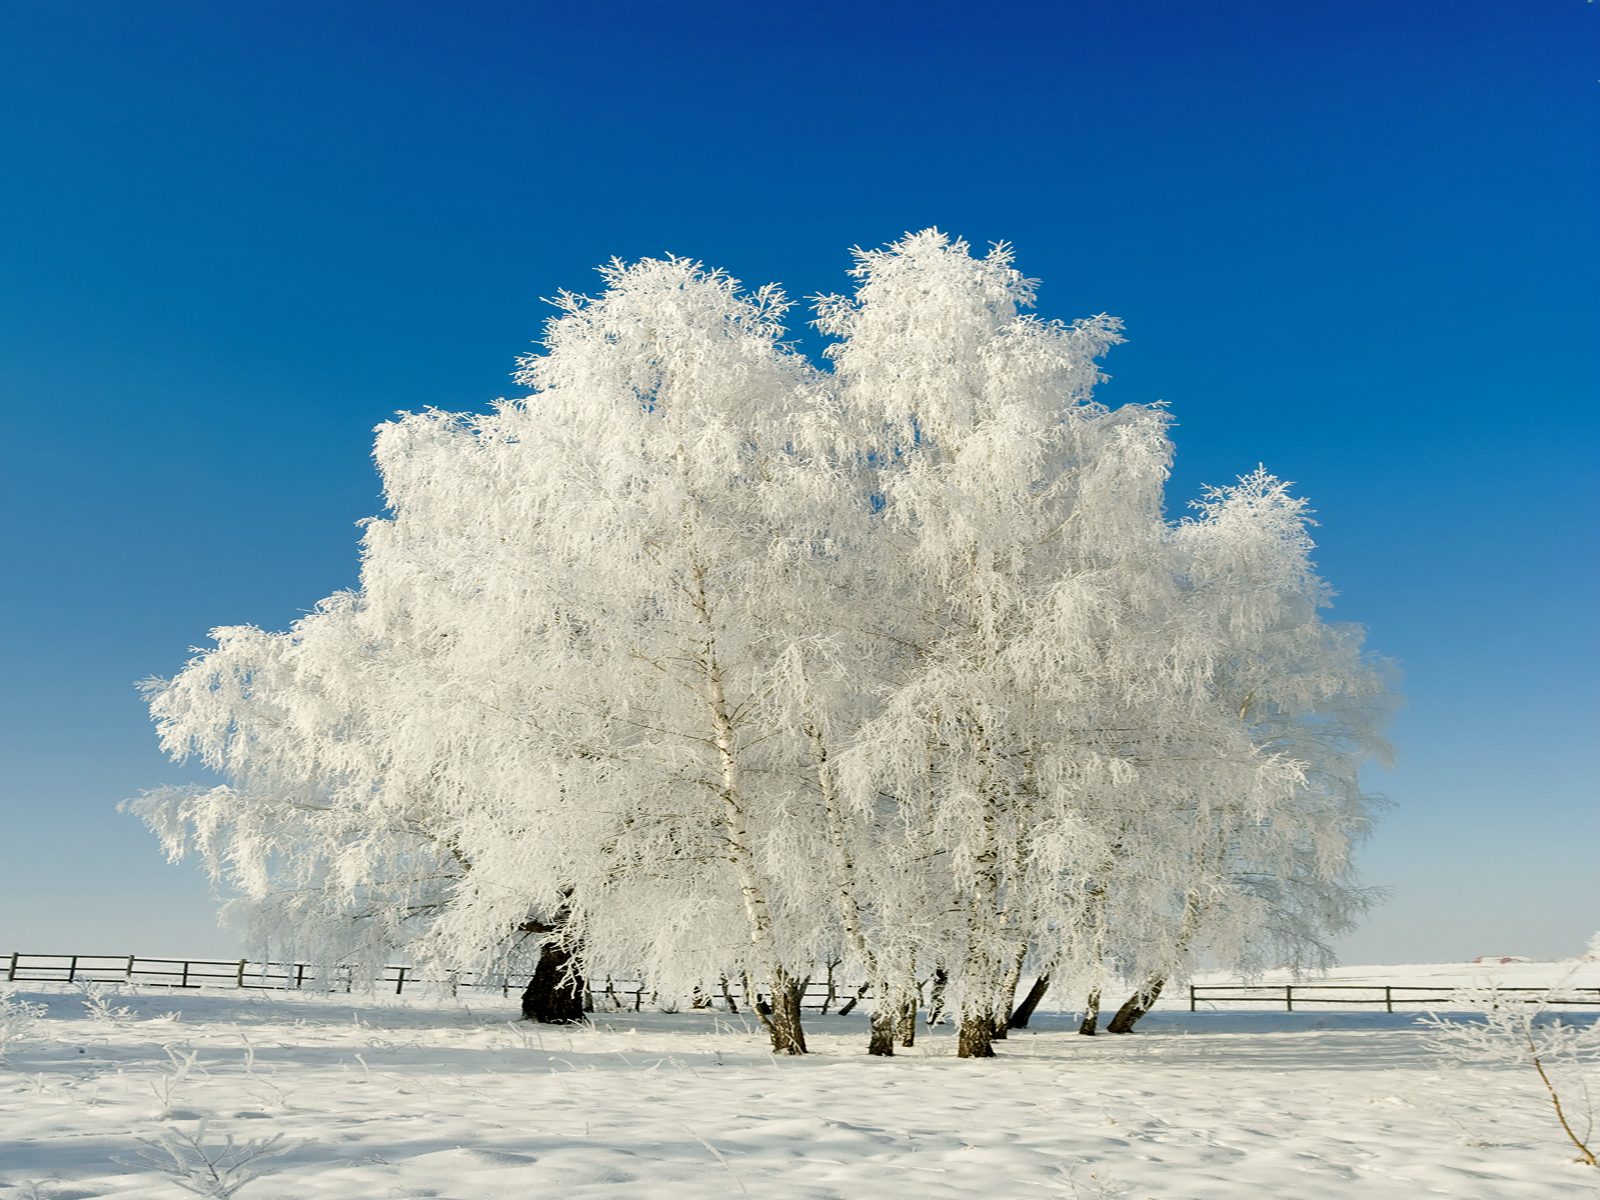 Winter Trees Wallpaper